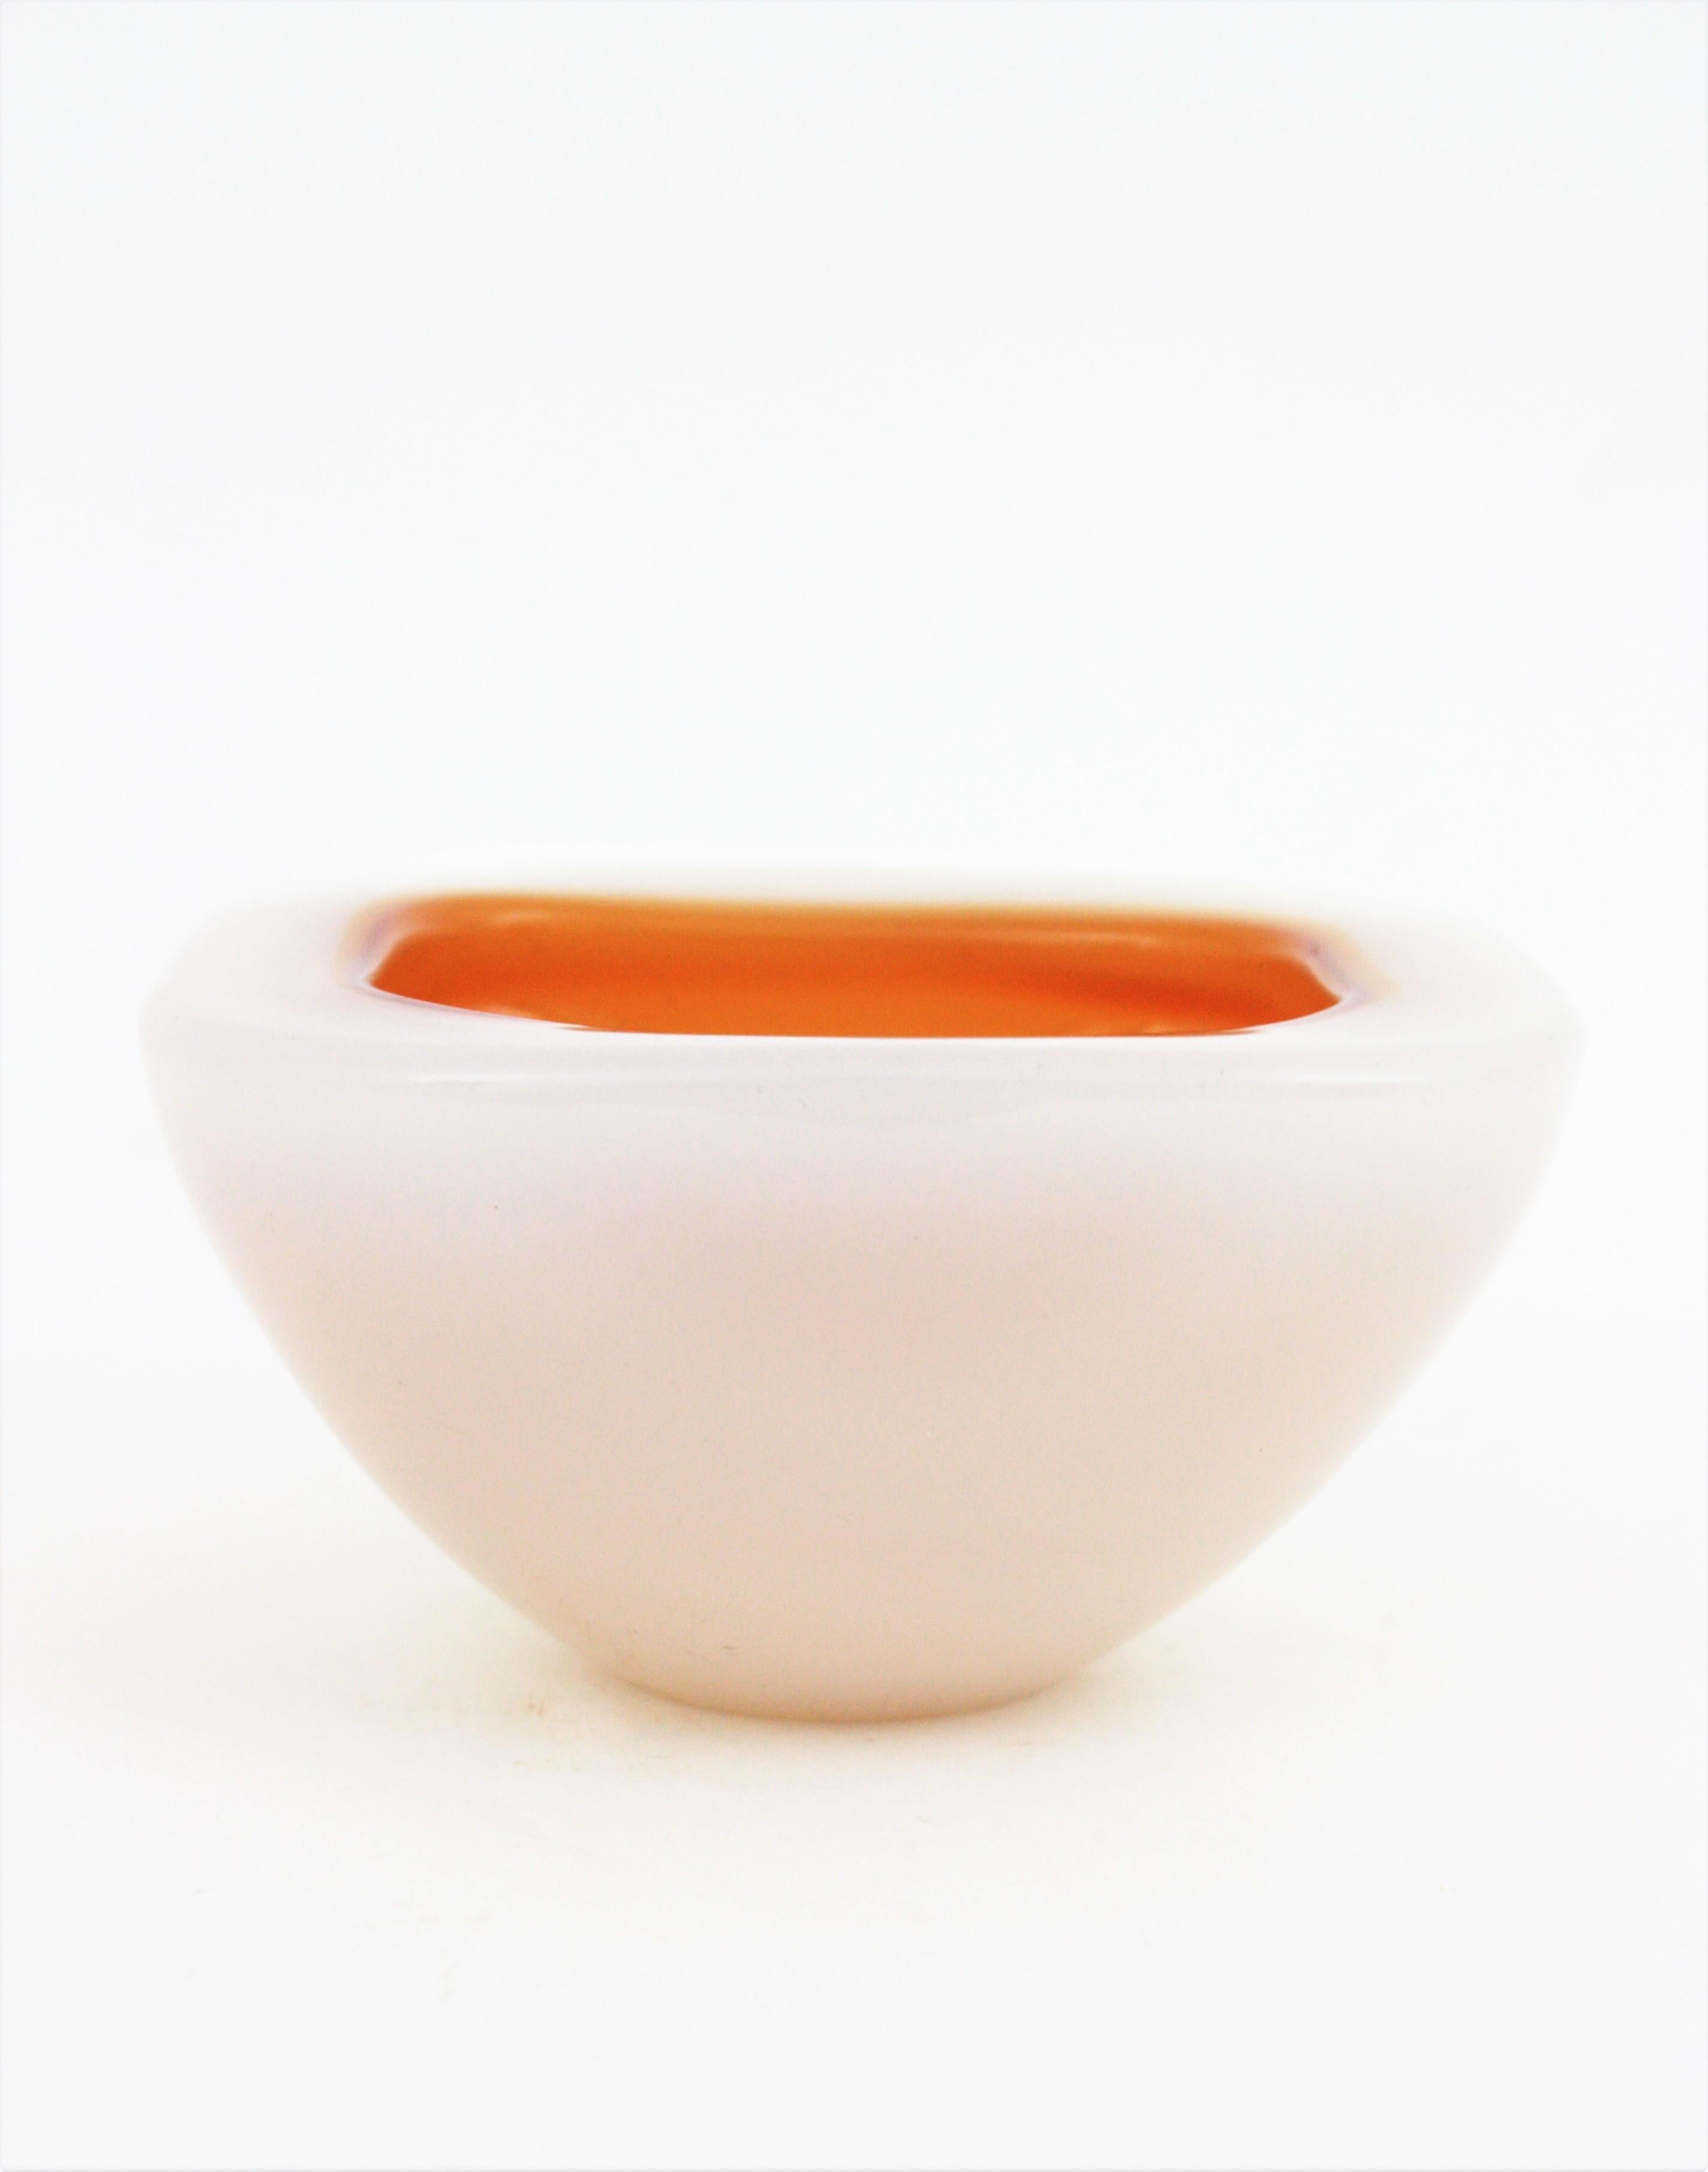 Archimede Seguso Alabastro Murano White Amber Geode Glass Bowl, 1950s For Sale 6